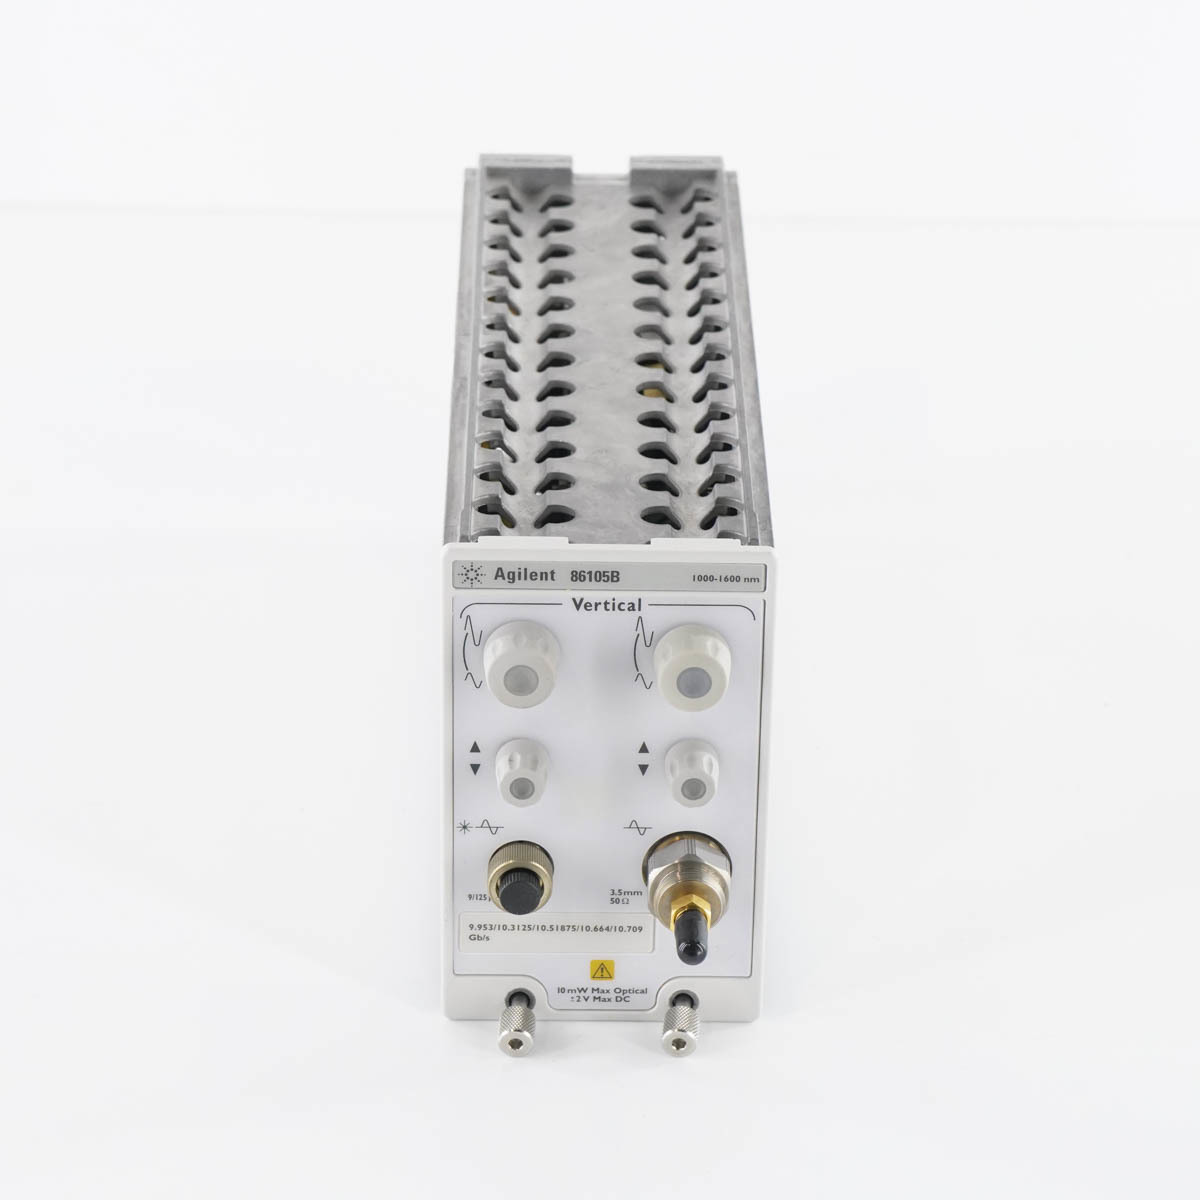 [JB]現状販売 86105B ATO-620 Agilent UK6 101 1000-1600nm アジレント hp Keysight キーサイト Optical/Electrical Module..[05416-0121]_画像3